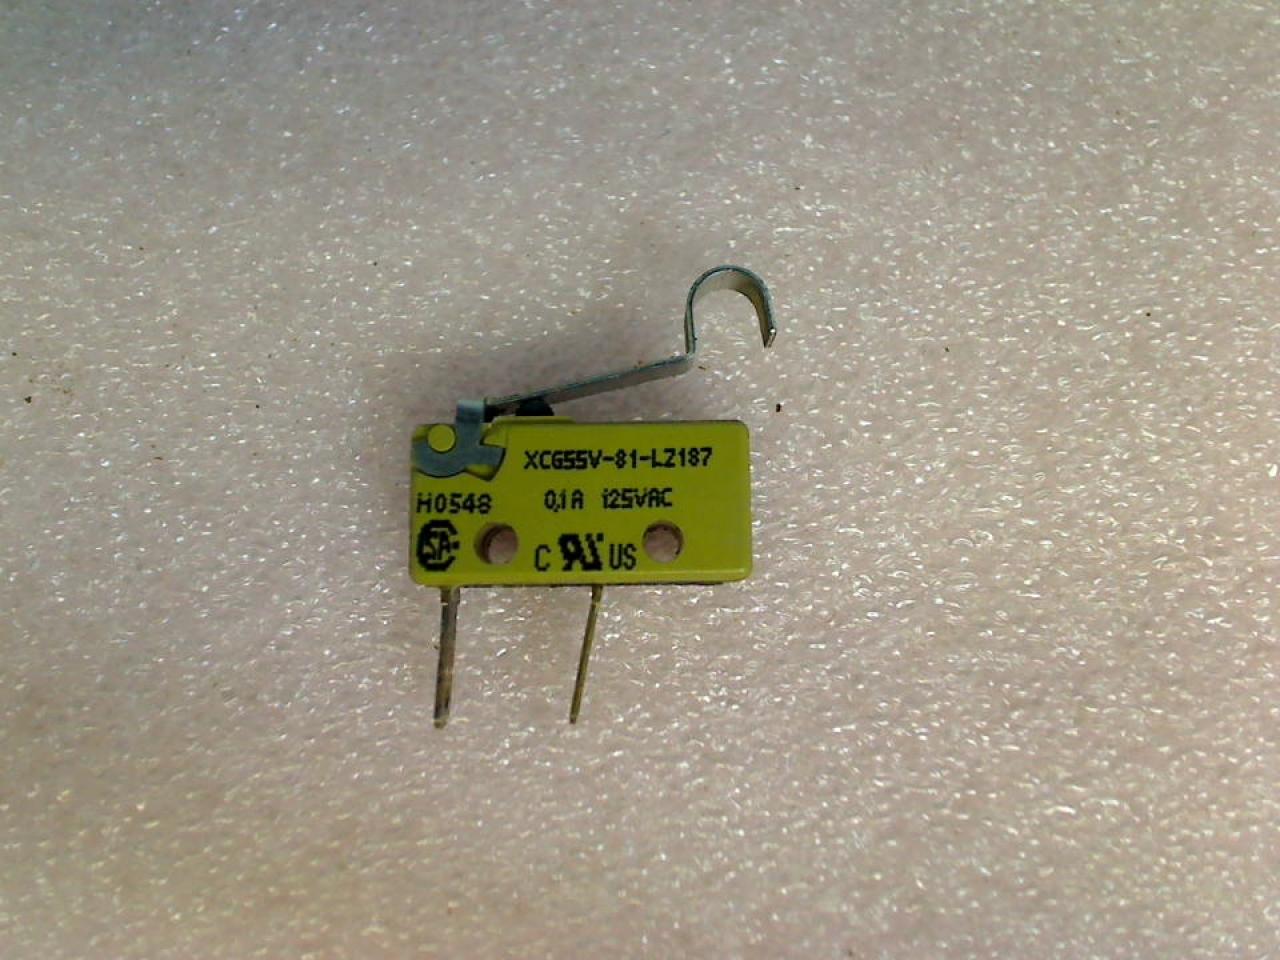 Micro Switch Sensor Schalter XCG55V-81-LZ187 Siemens Surpresso S40